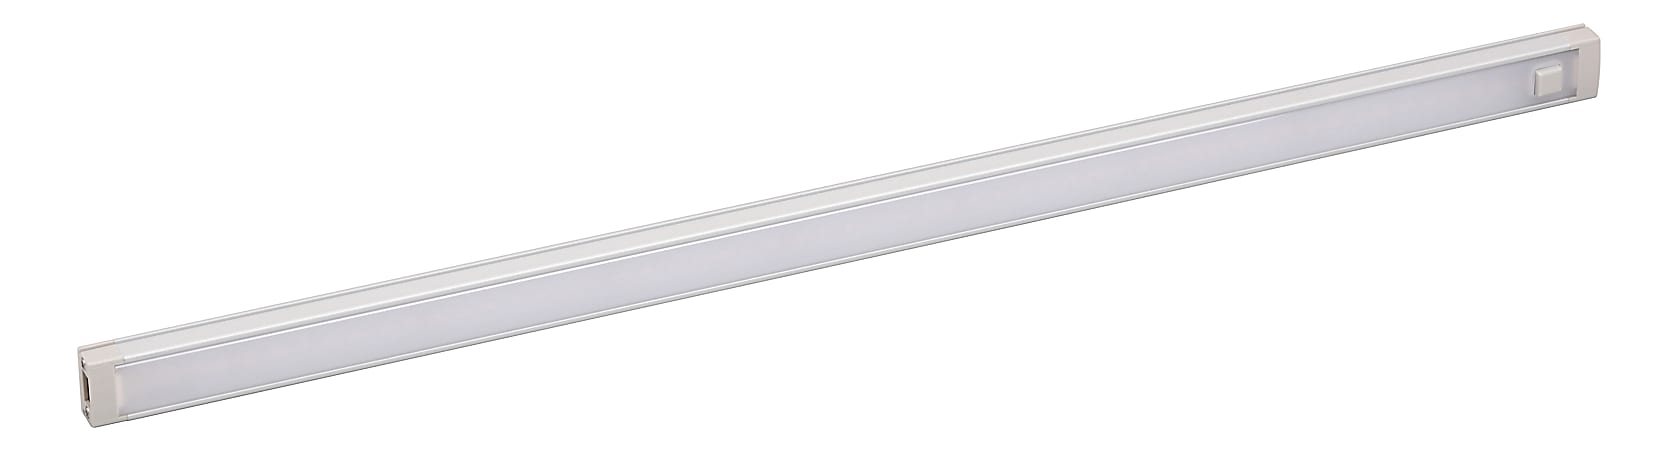 Black and Decker 1-bar LED Under Cabinet Lighting Kit